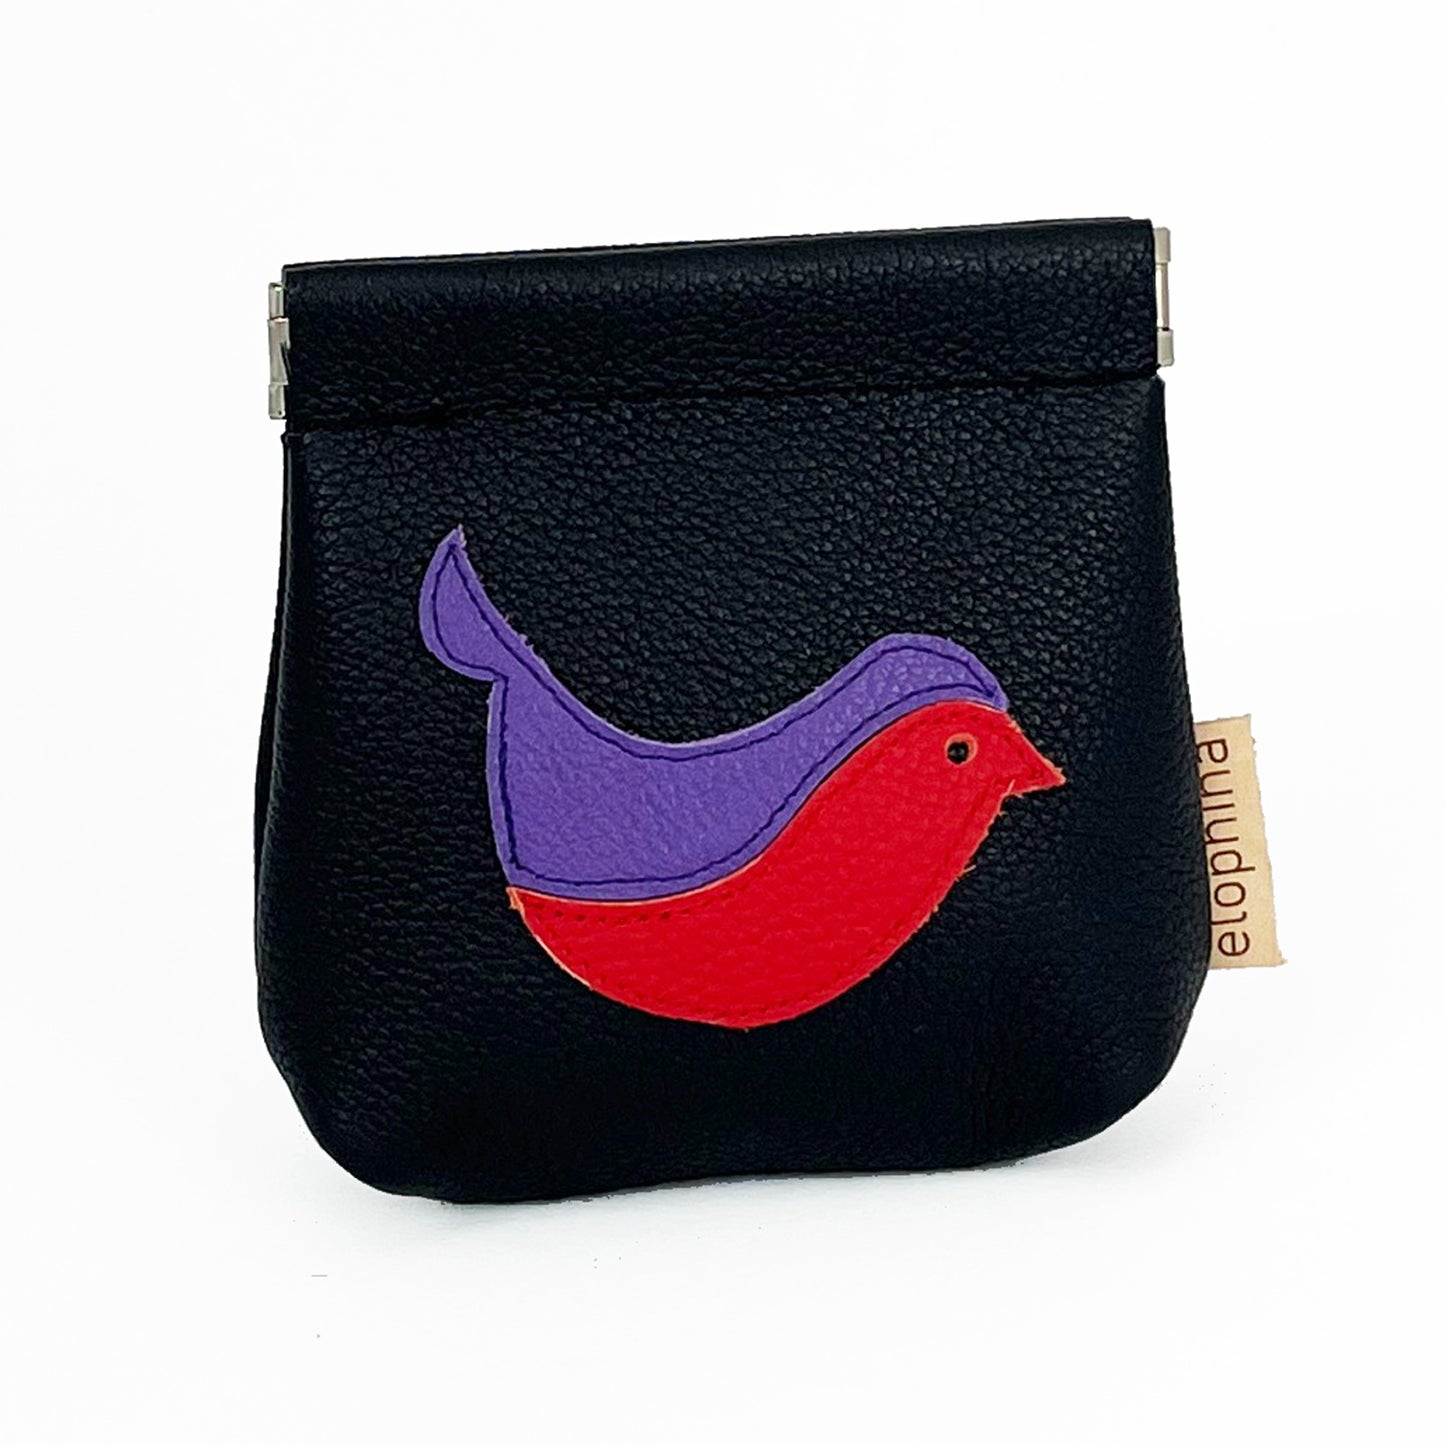 Bird coin purse red/purple